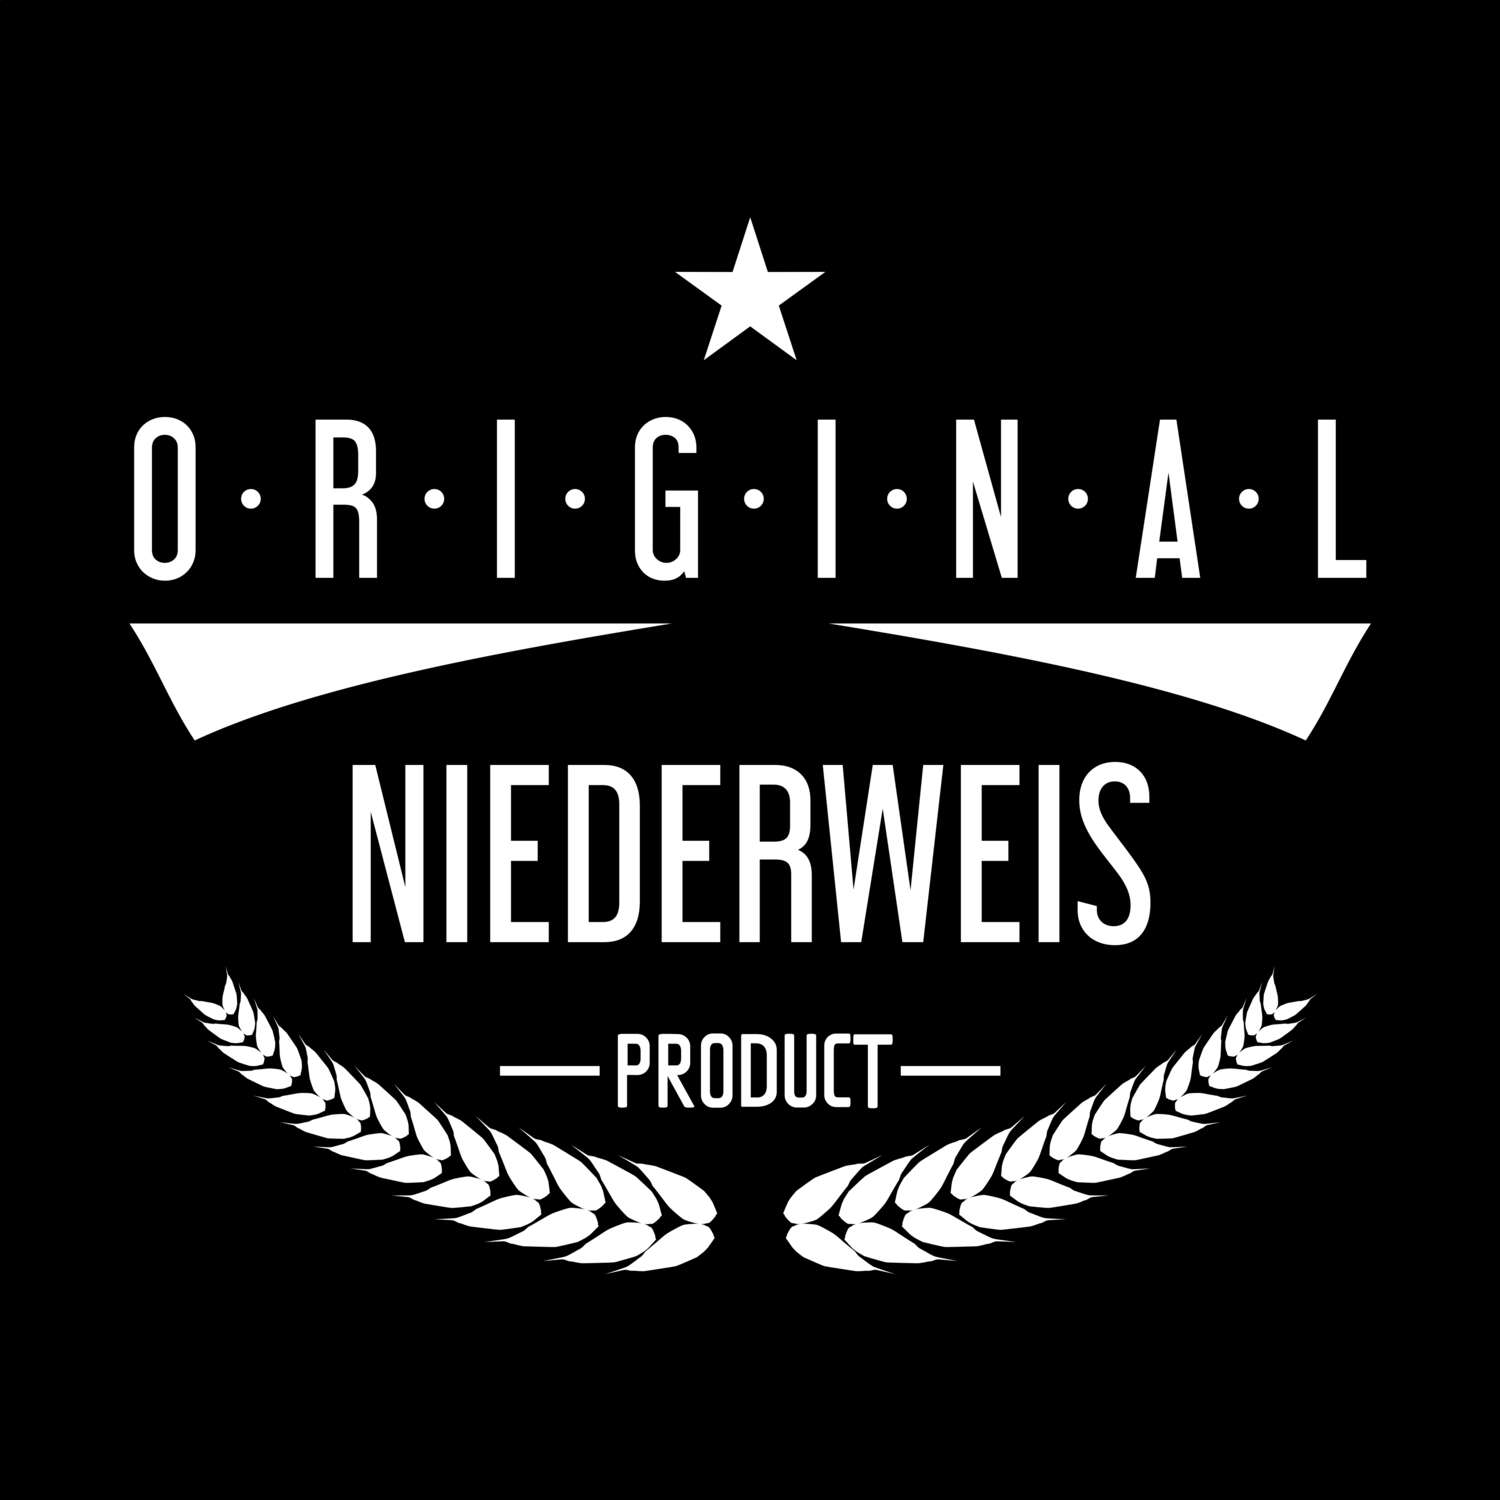 Niederweis T-Shirt »Original Product«